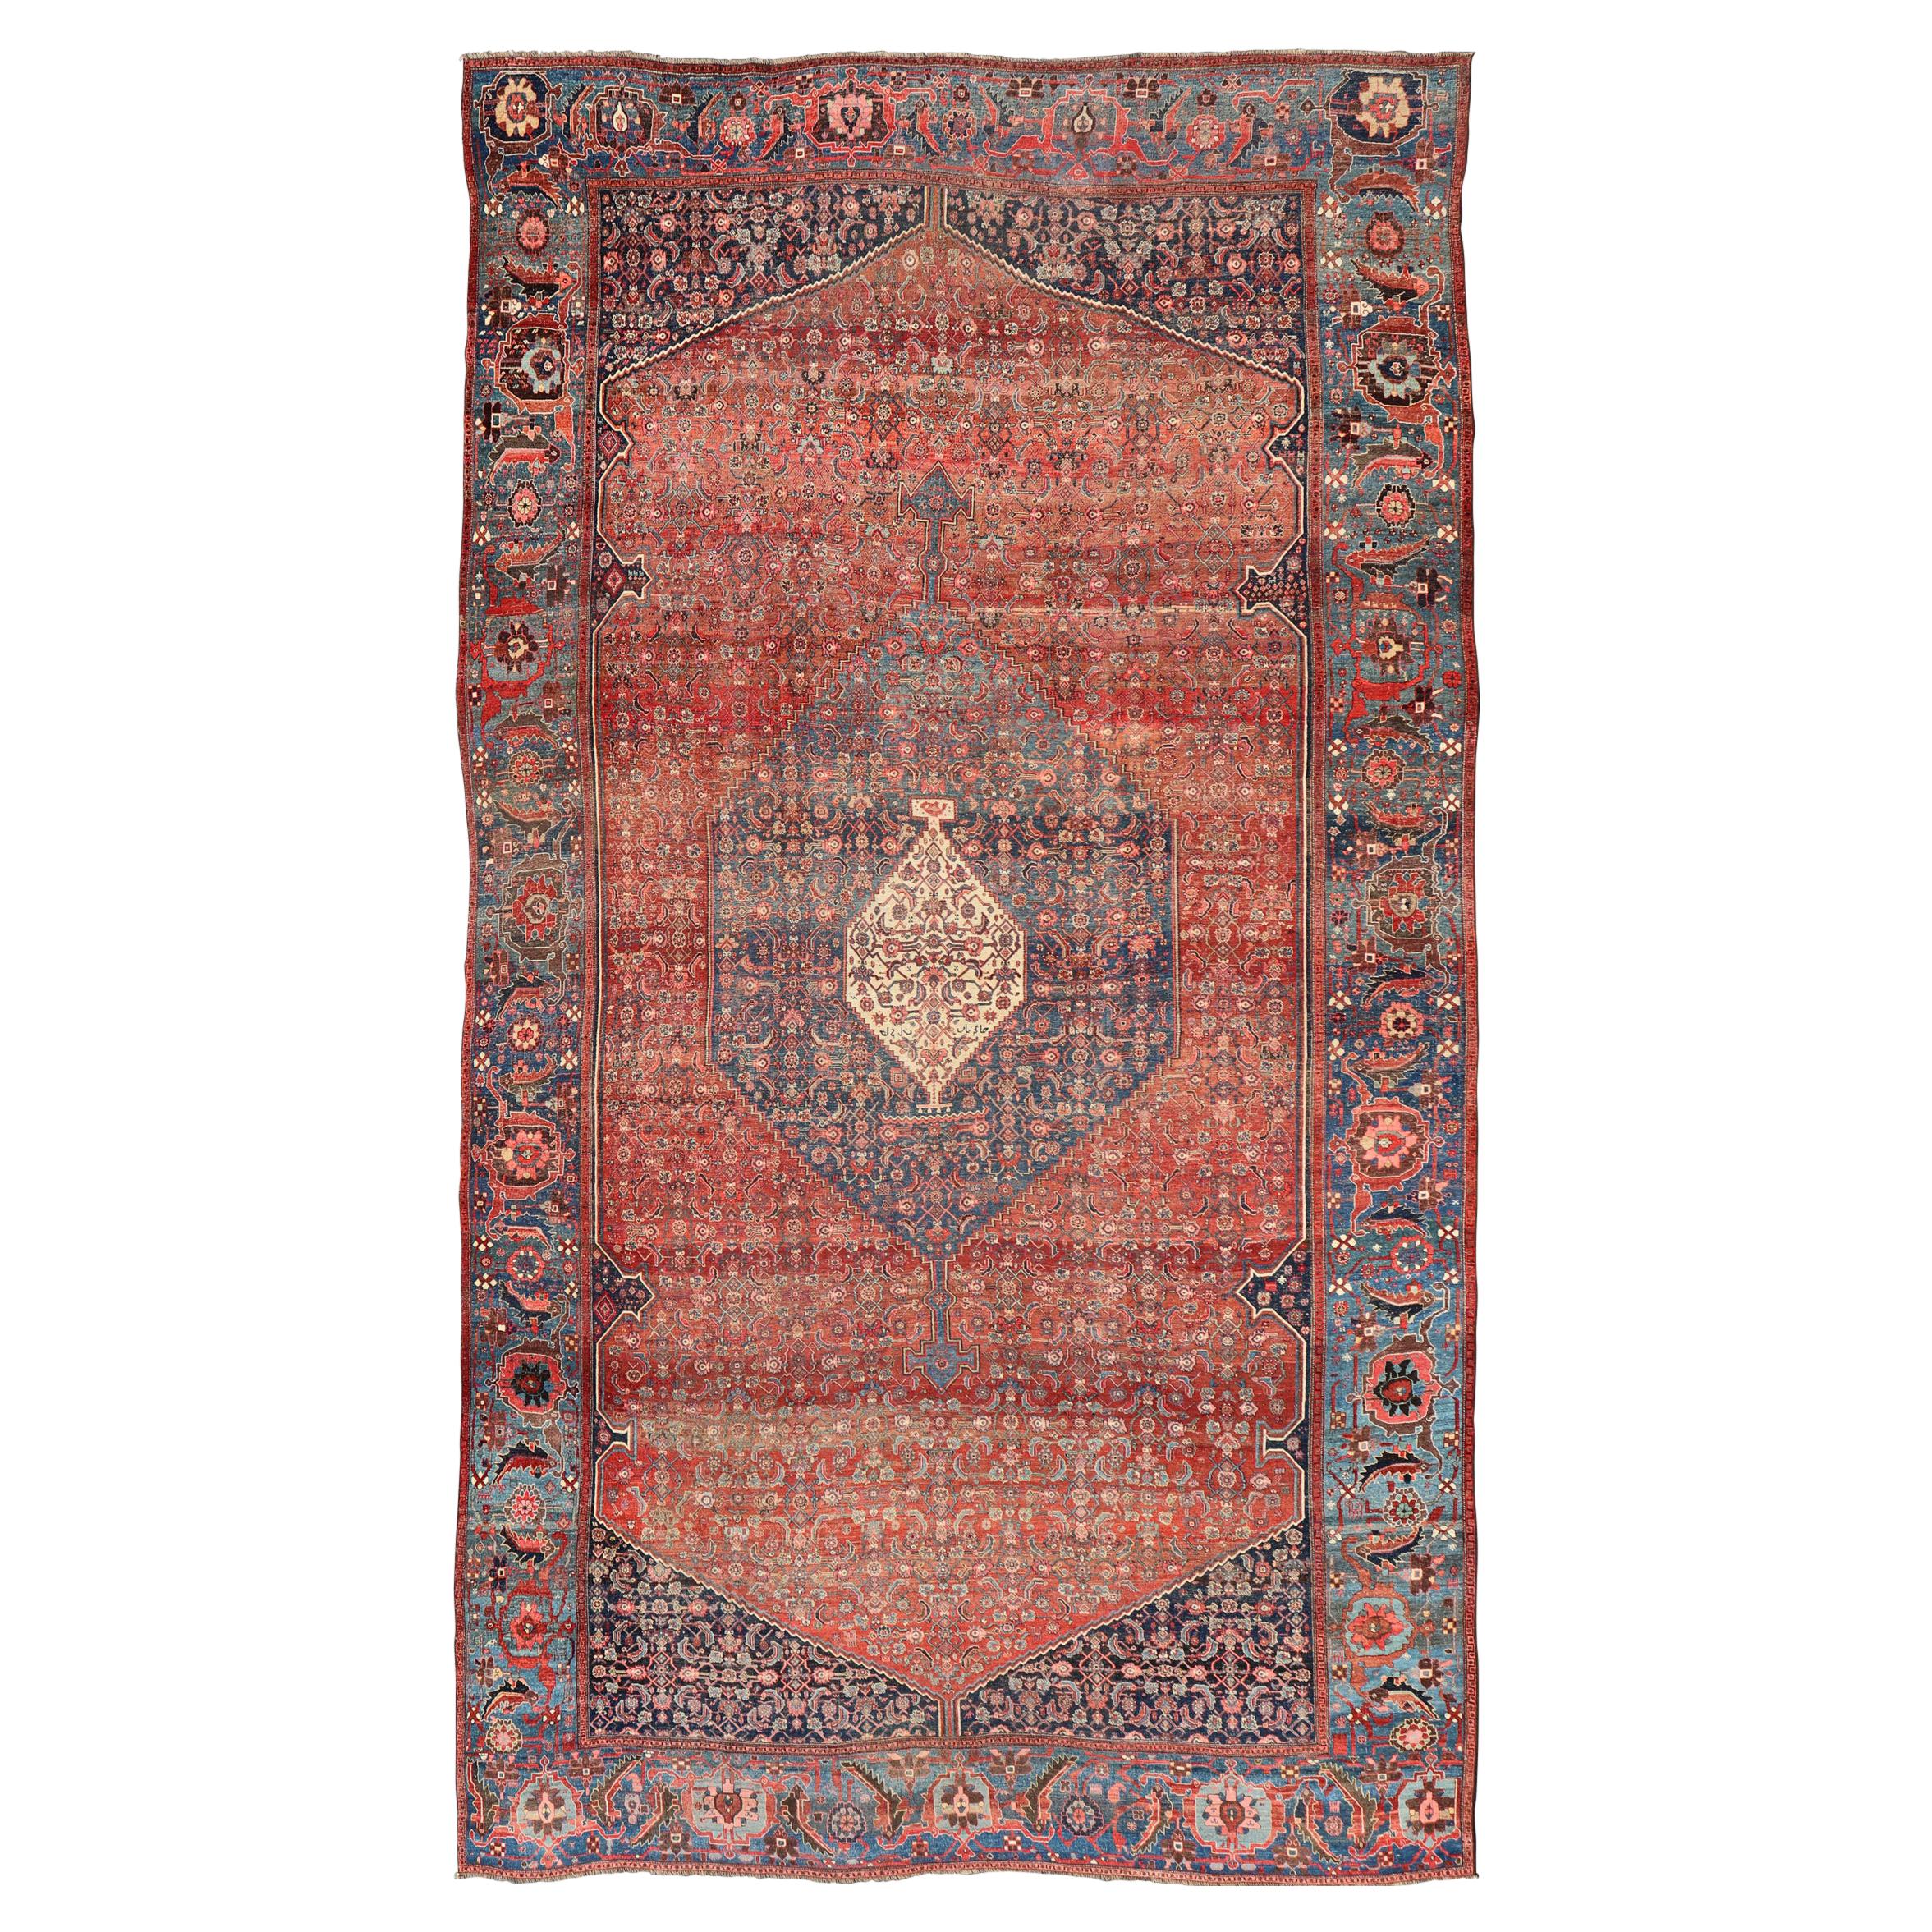 Très grand tapis persan ancien Bidjar dans de multiples nuances de bleu, Tera-Cotta et rouge